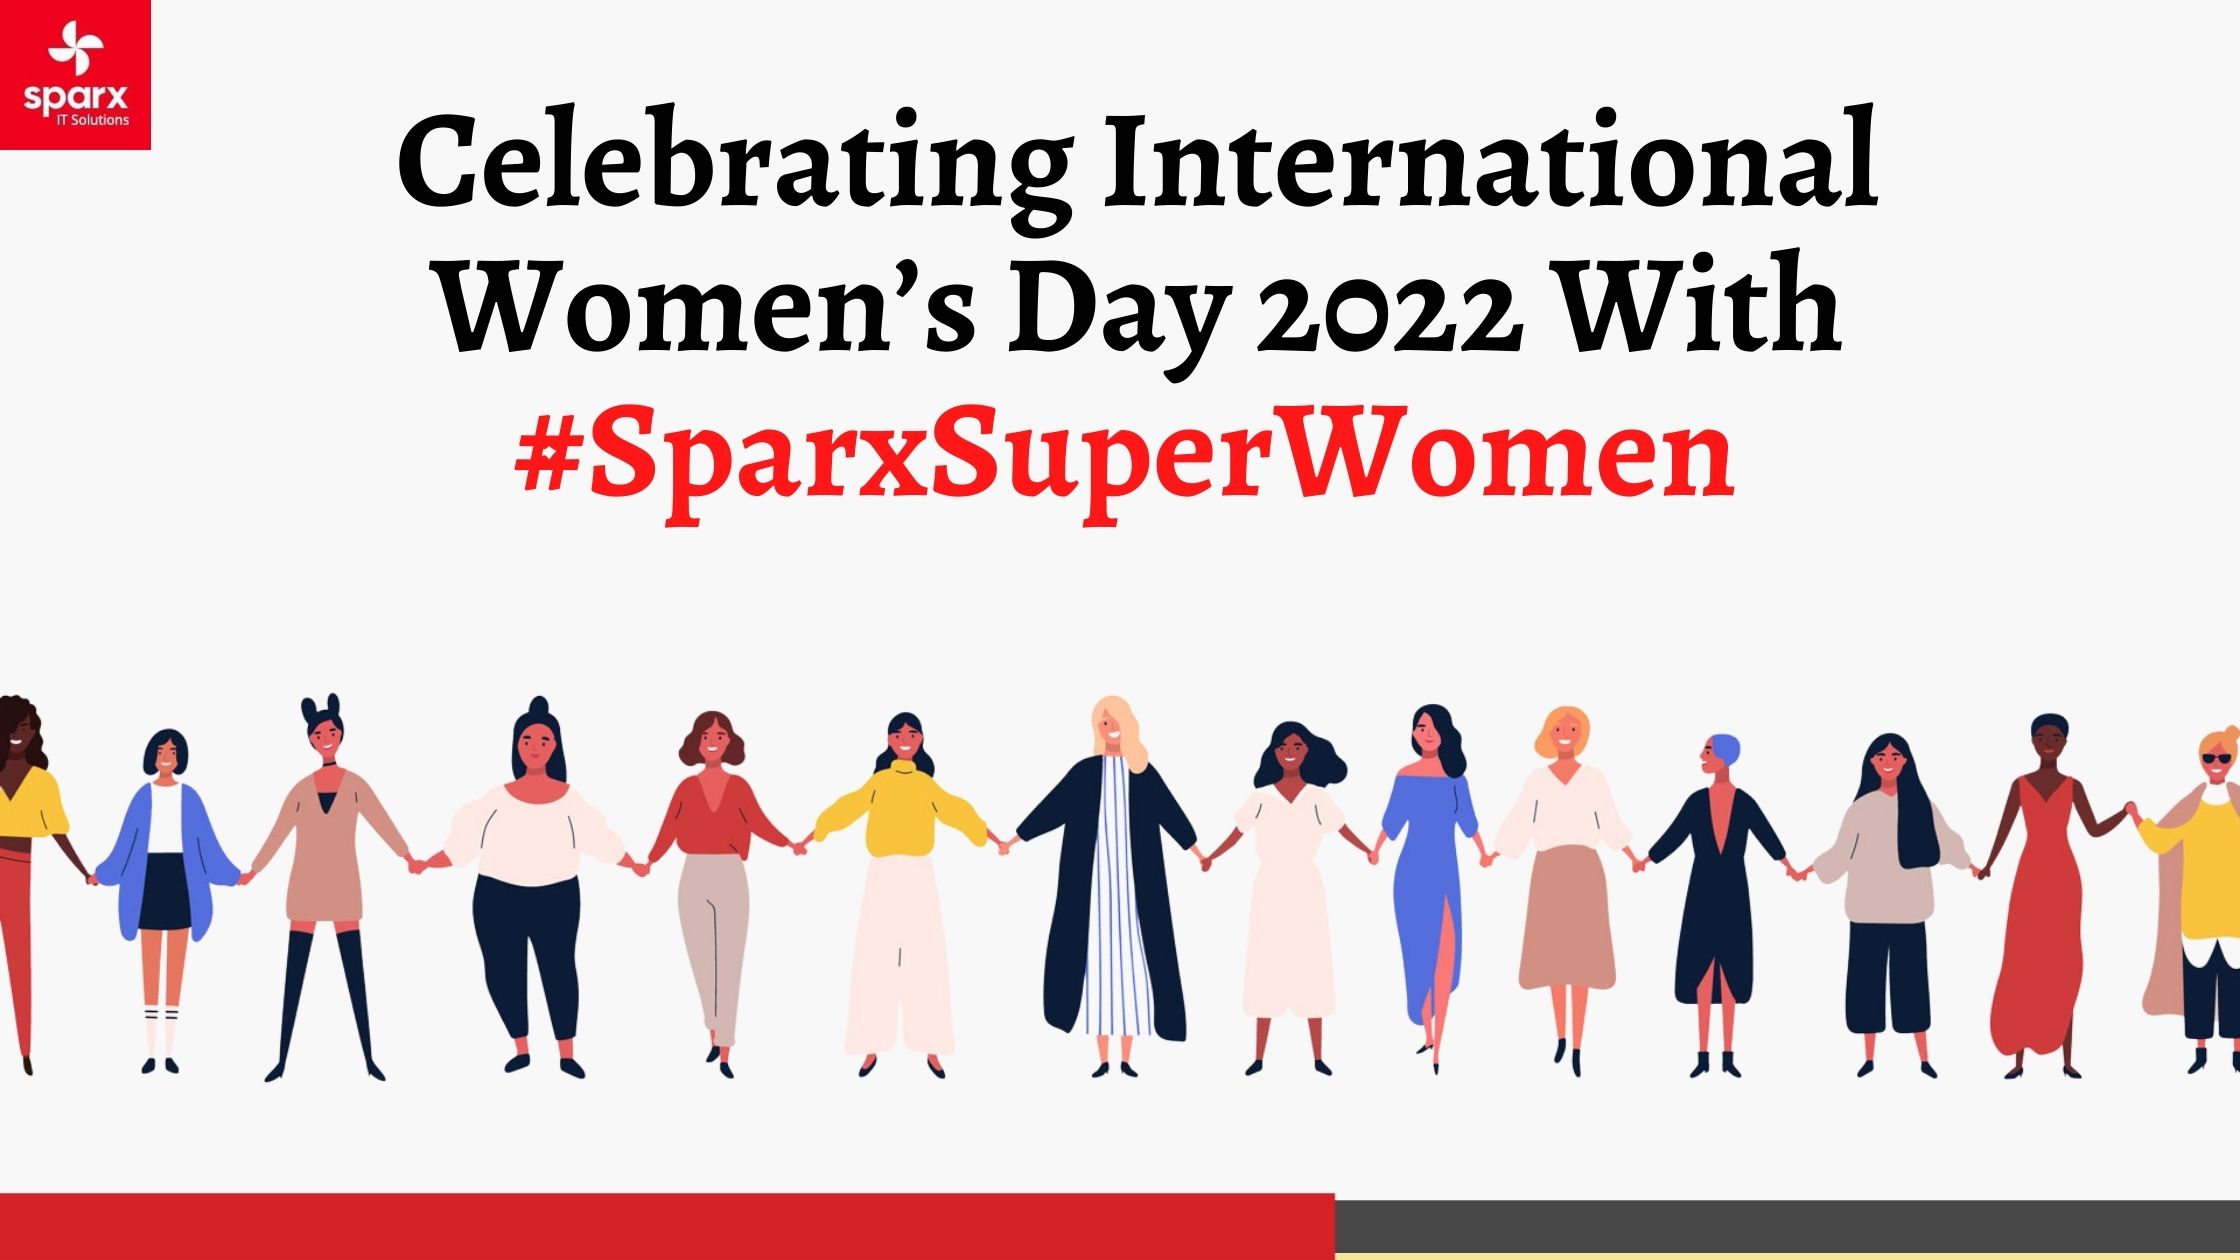 Celebrating International Women’s Day 2022 With #SparxSuperWomen